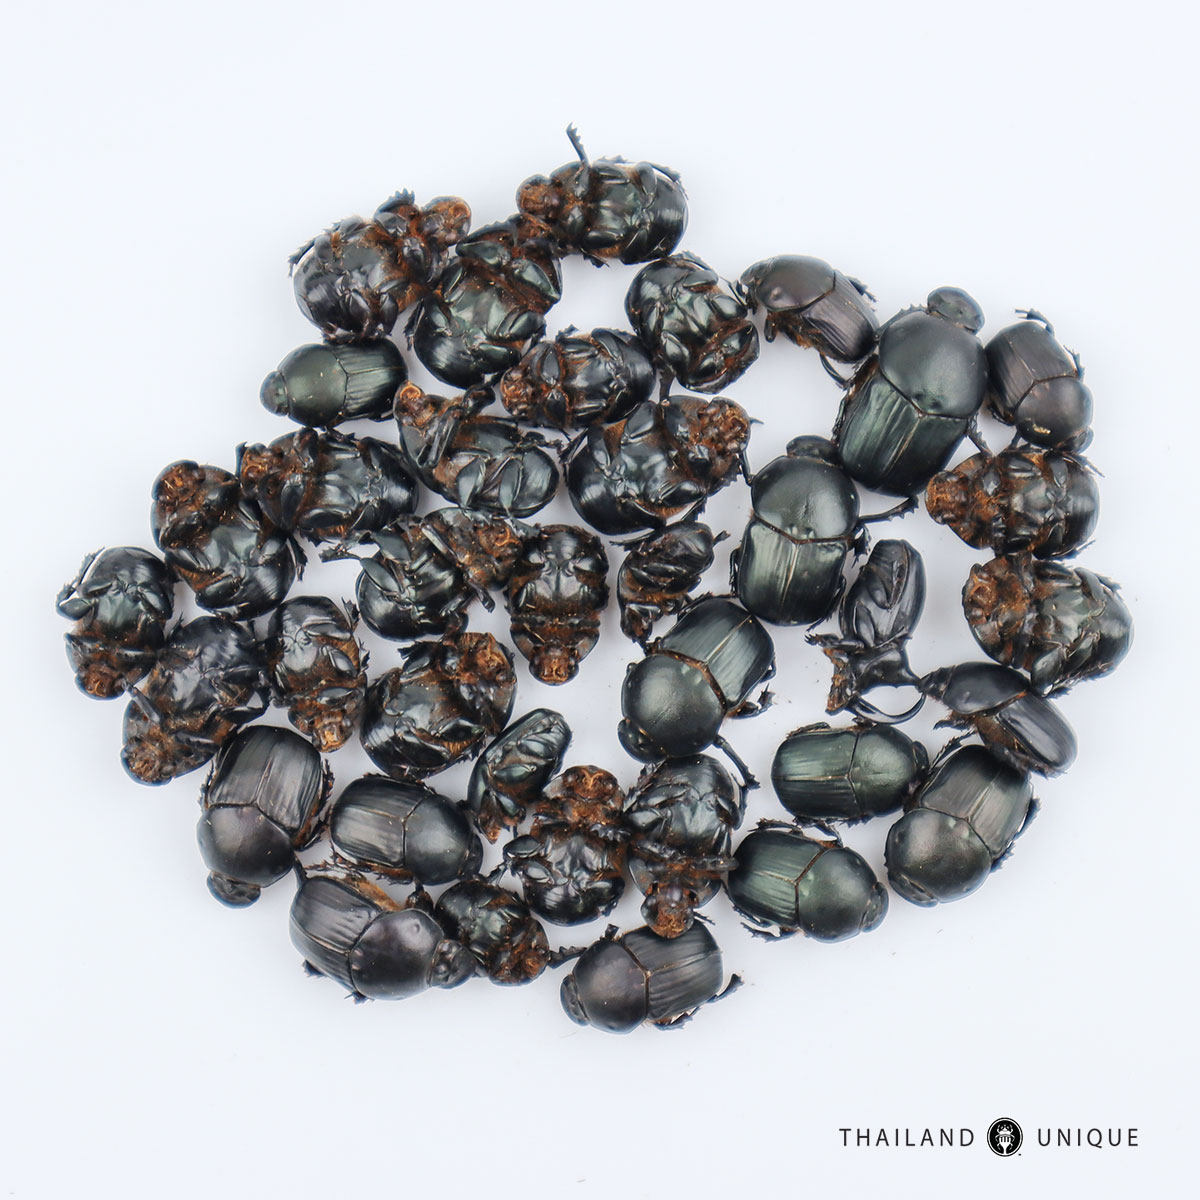 edible dung beetles